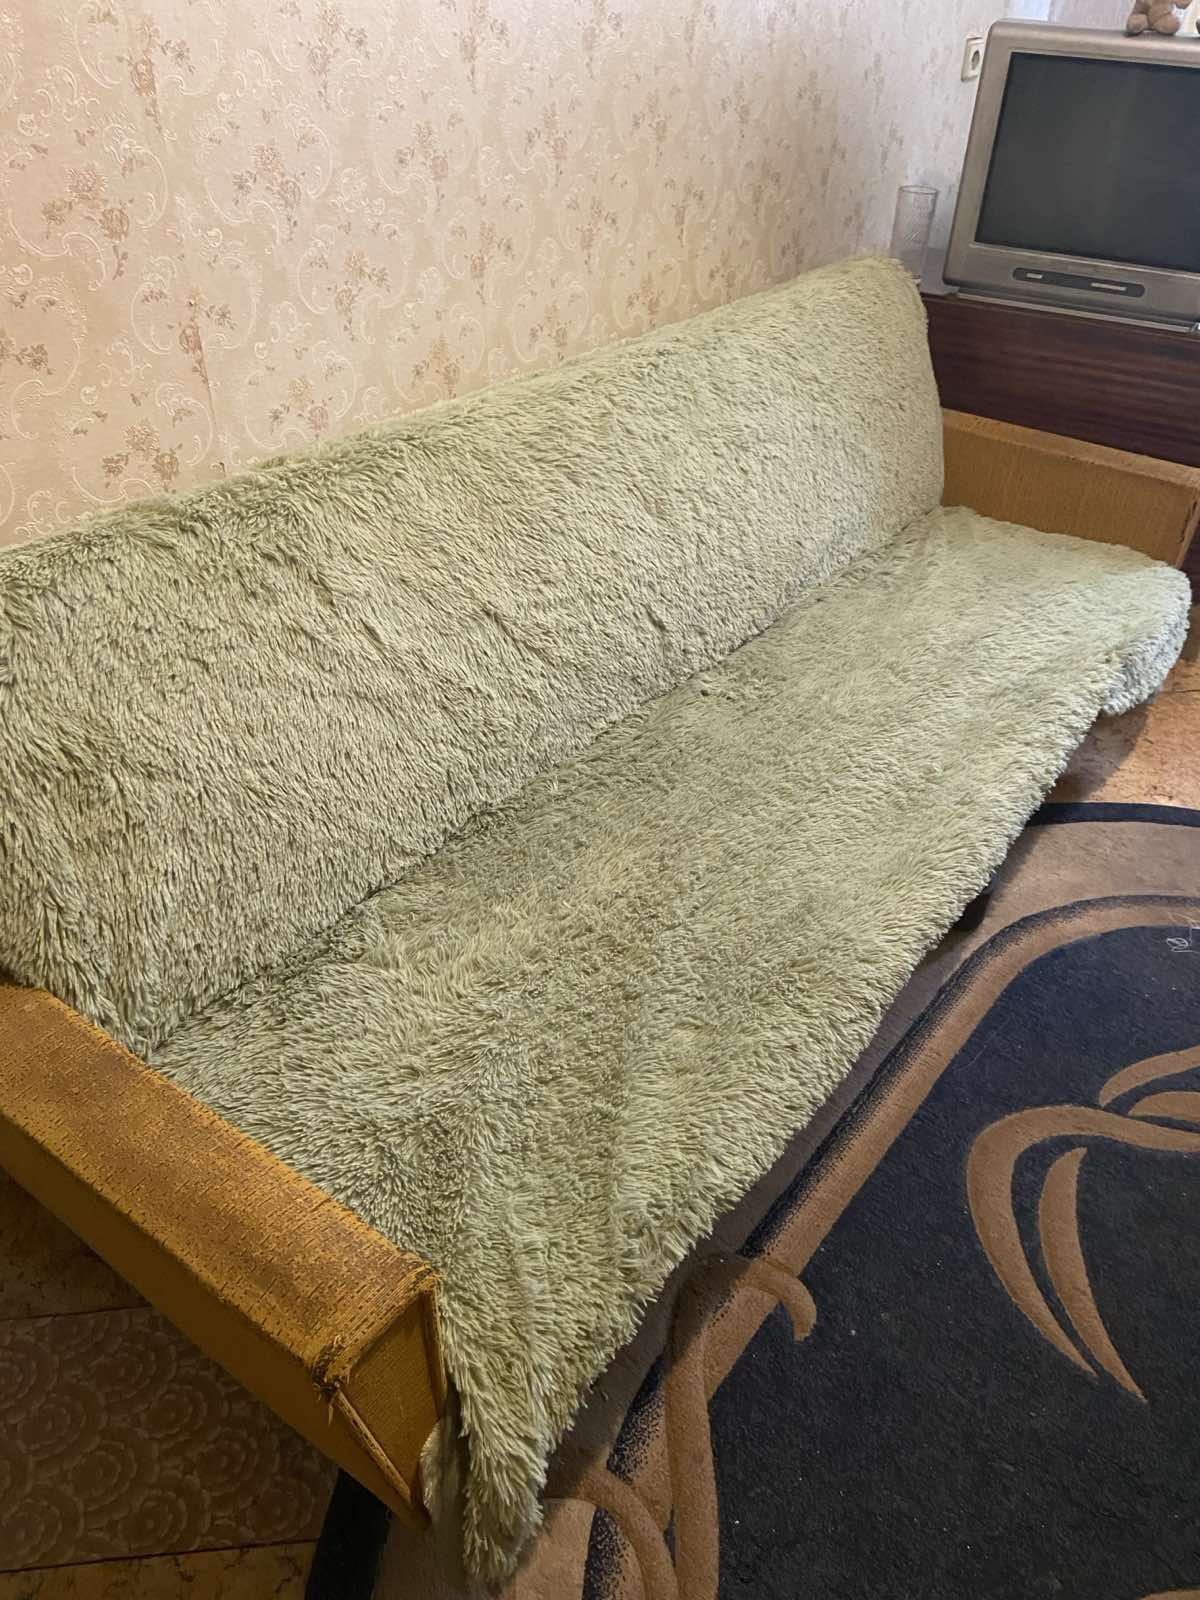 Мебель б/у Стенка(чешская), ковер,столик, диван, тумбы,  шкаф.